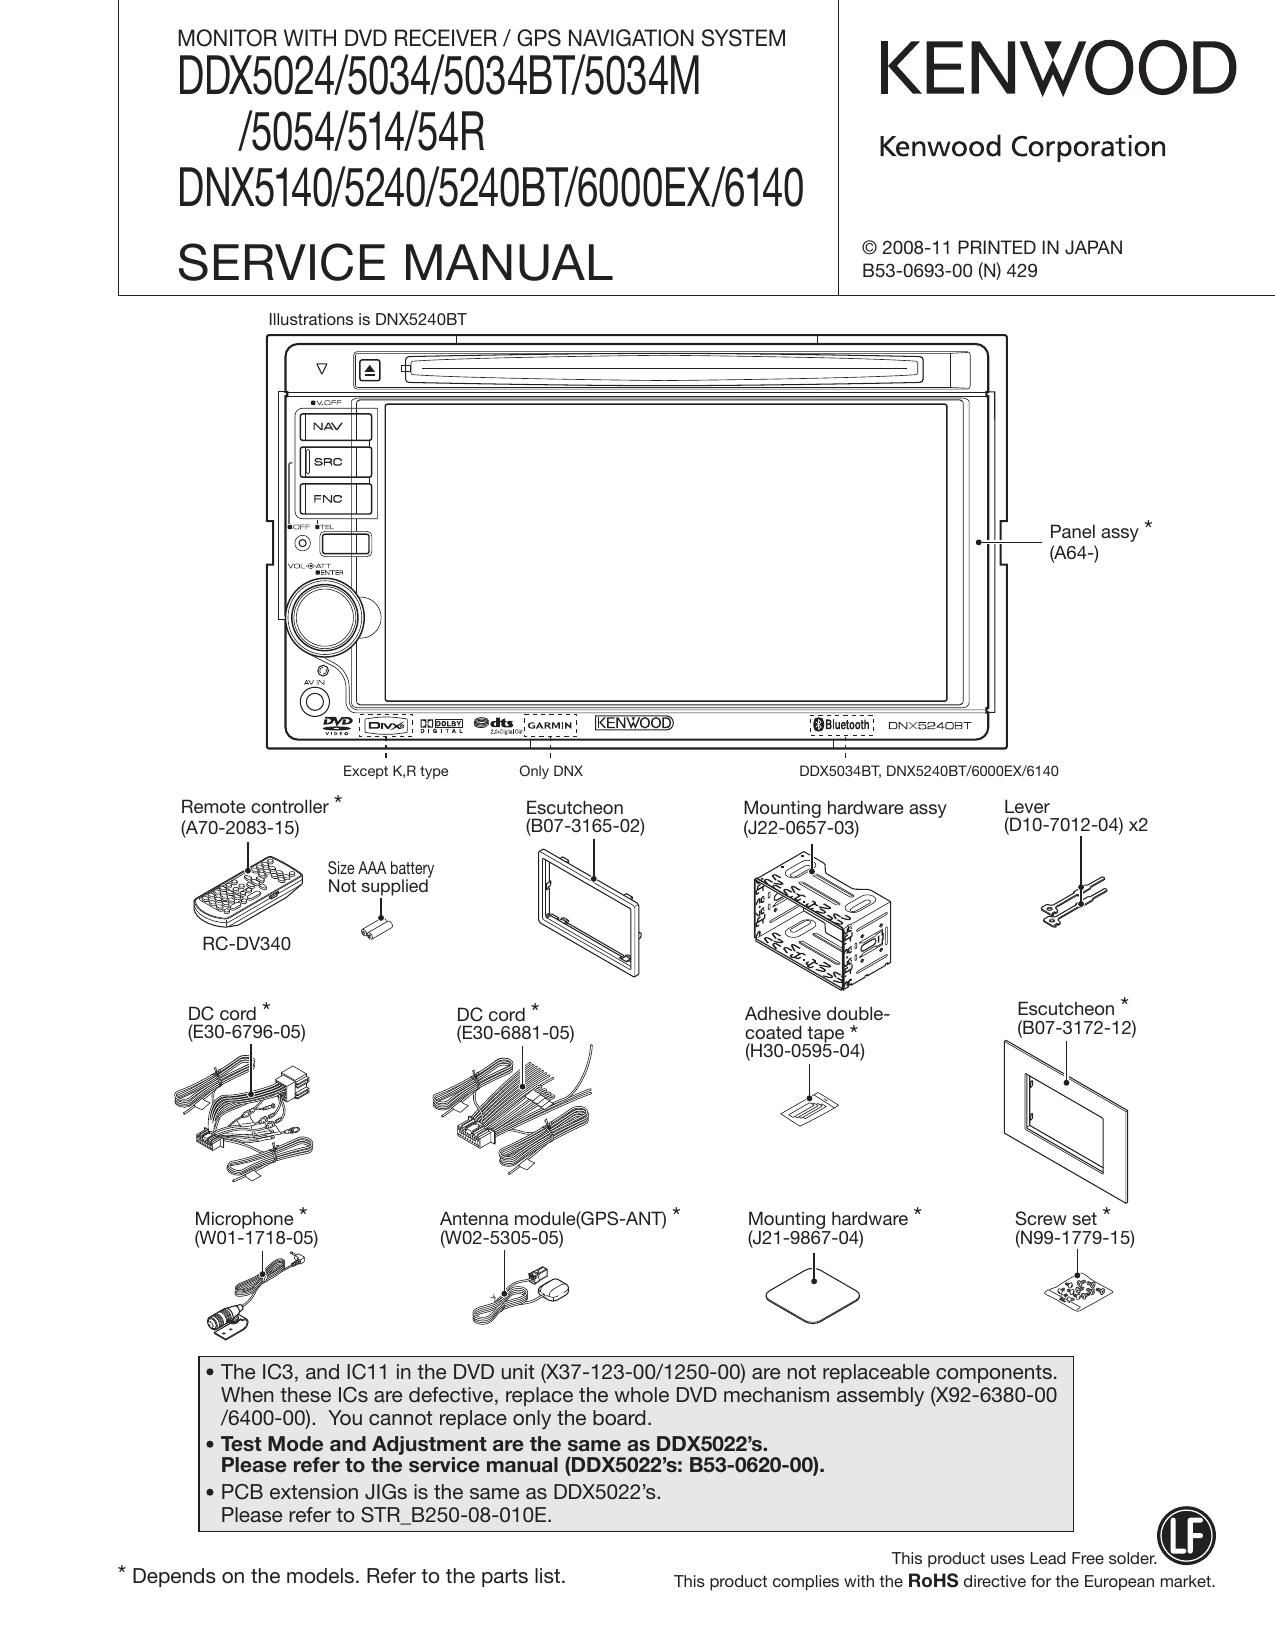 Kenwood DDX 5034 HU Service Manual